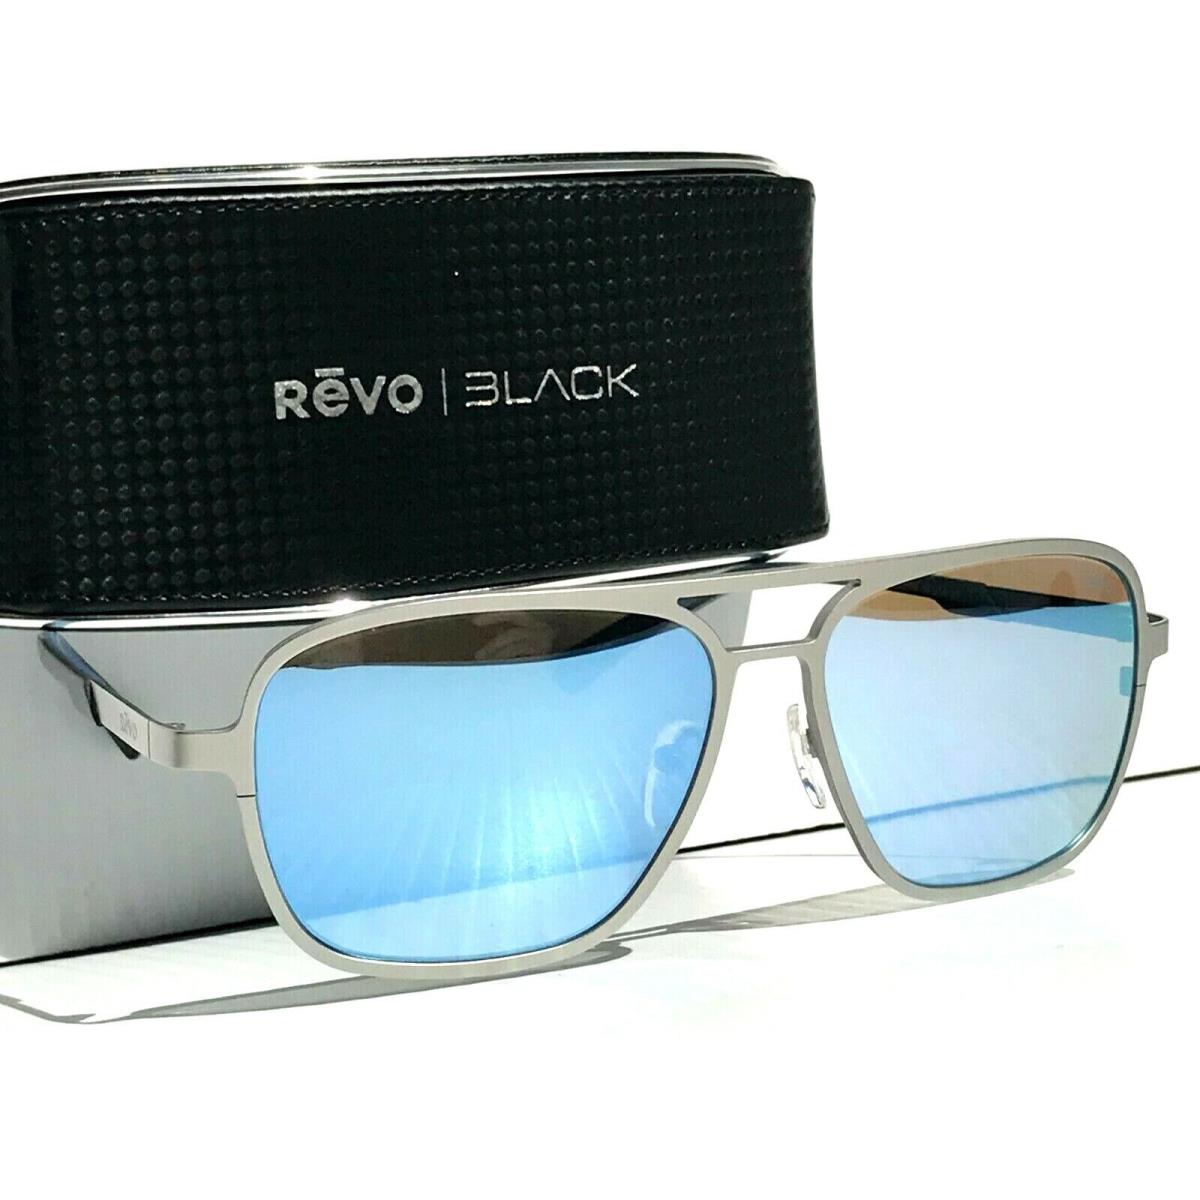 Revo sunglasses Horizon - Silver Frame, Blue Lens